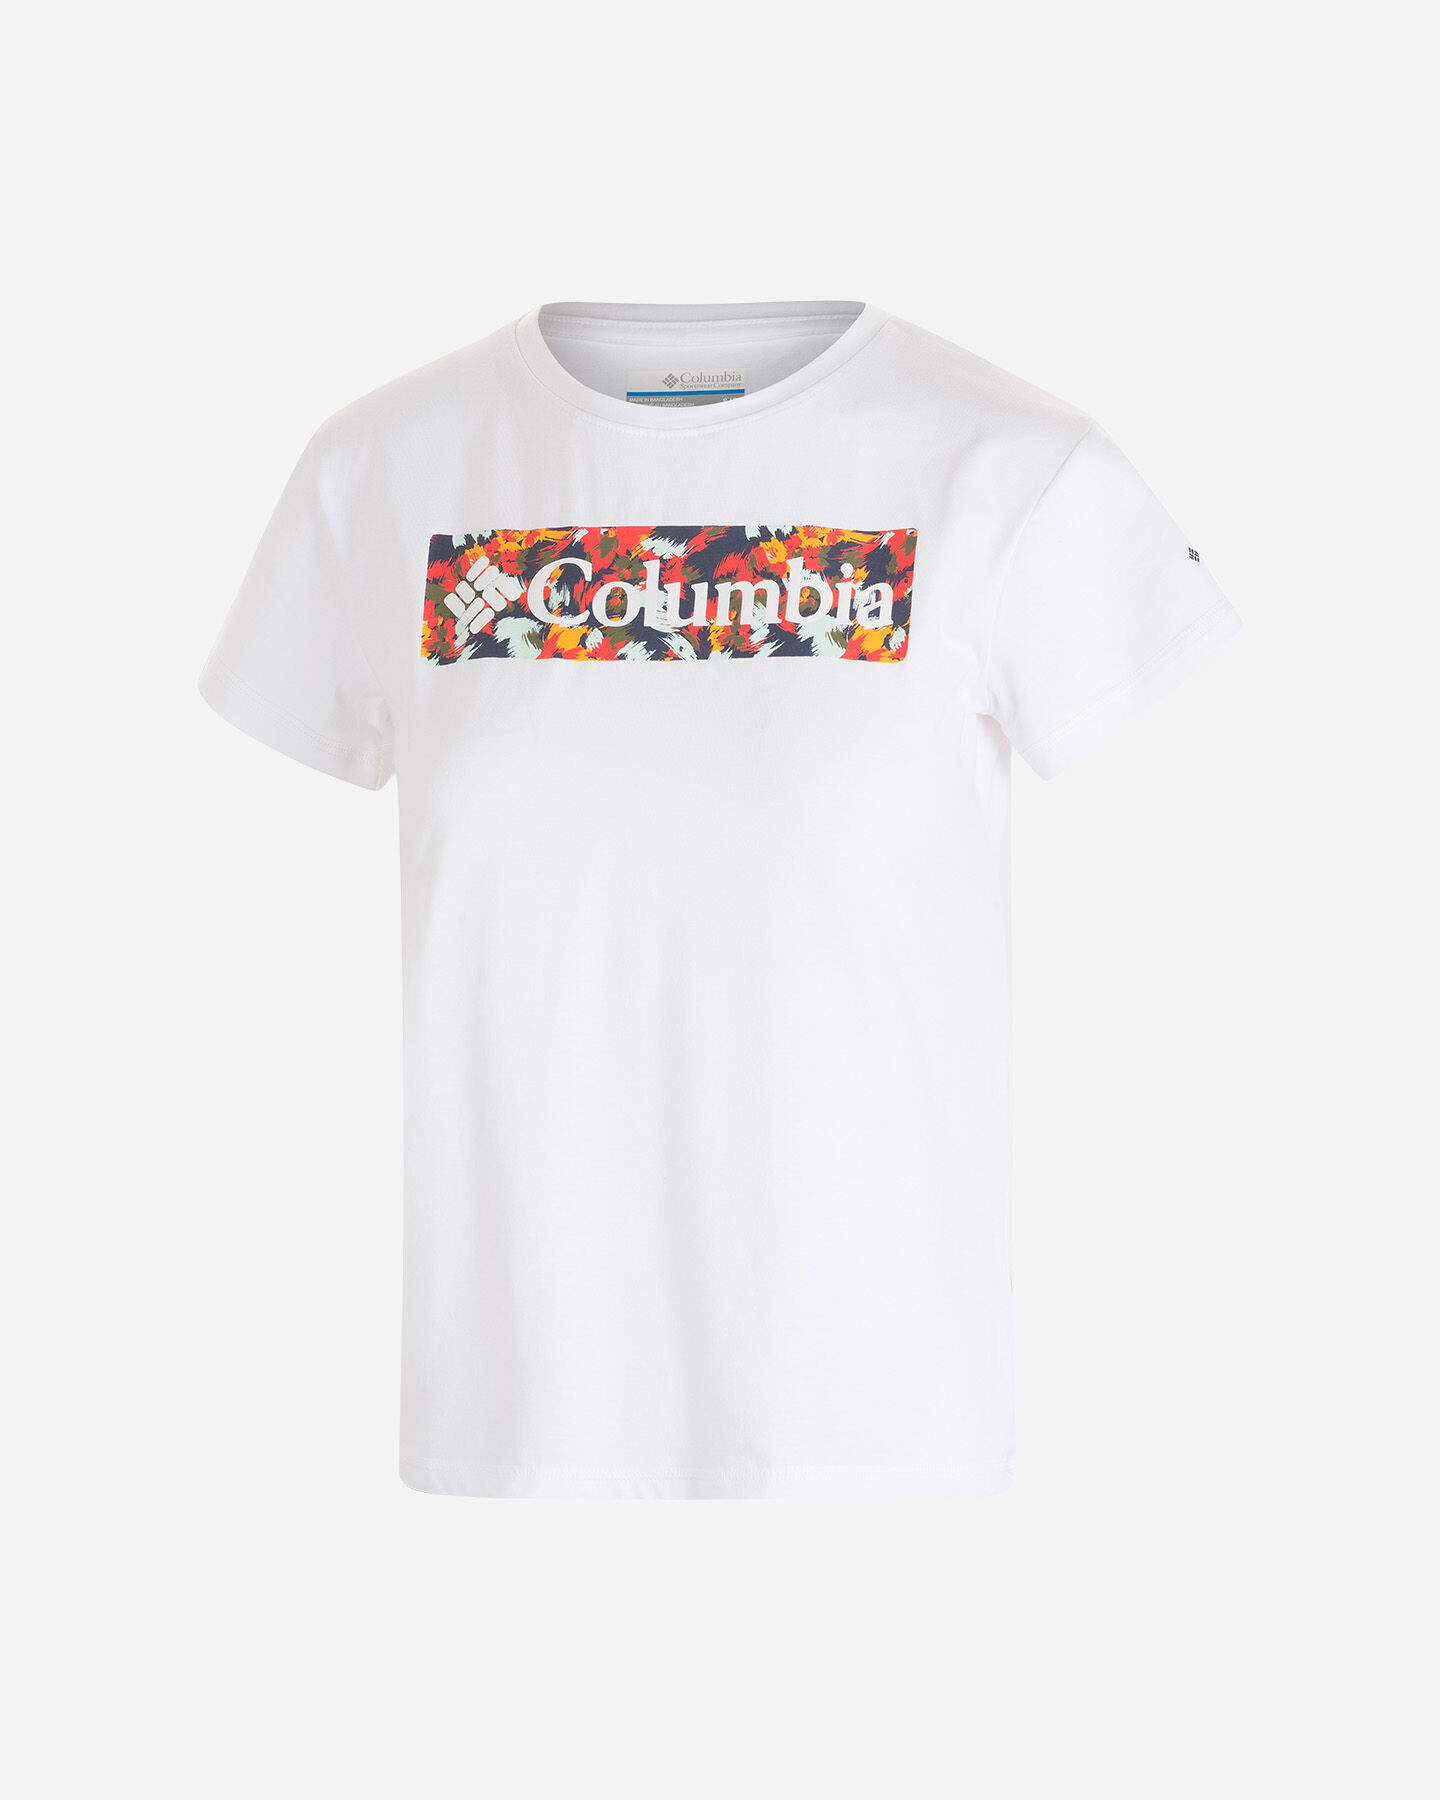  T-Shirt COLUMBIA SUN TREK W S5406947 scatto 0